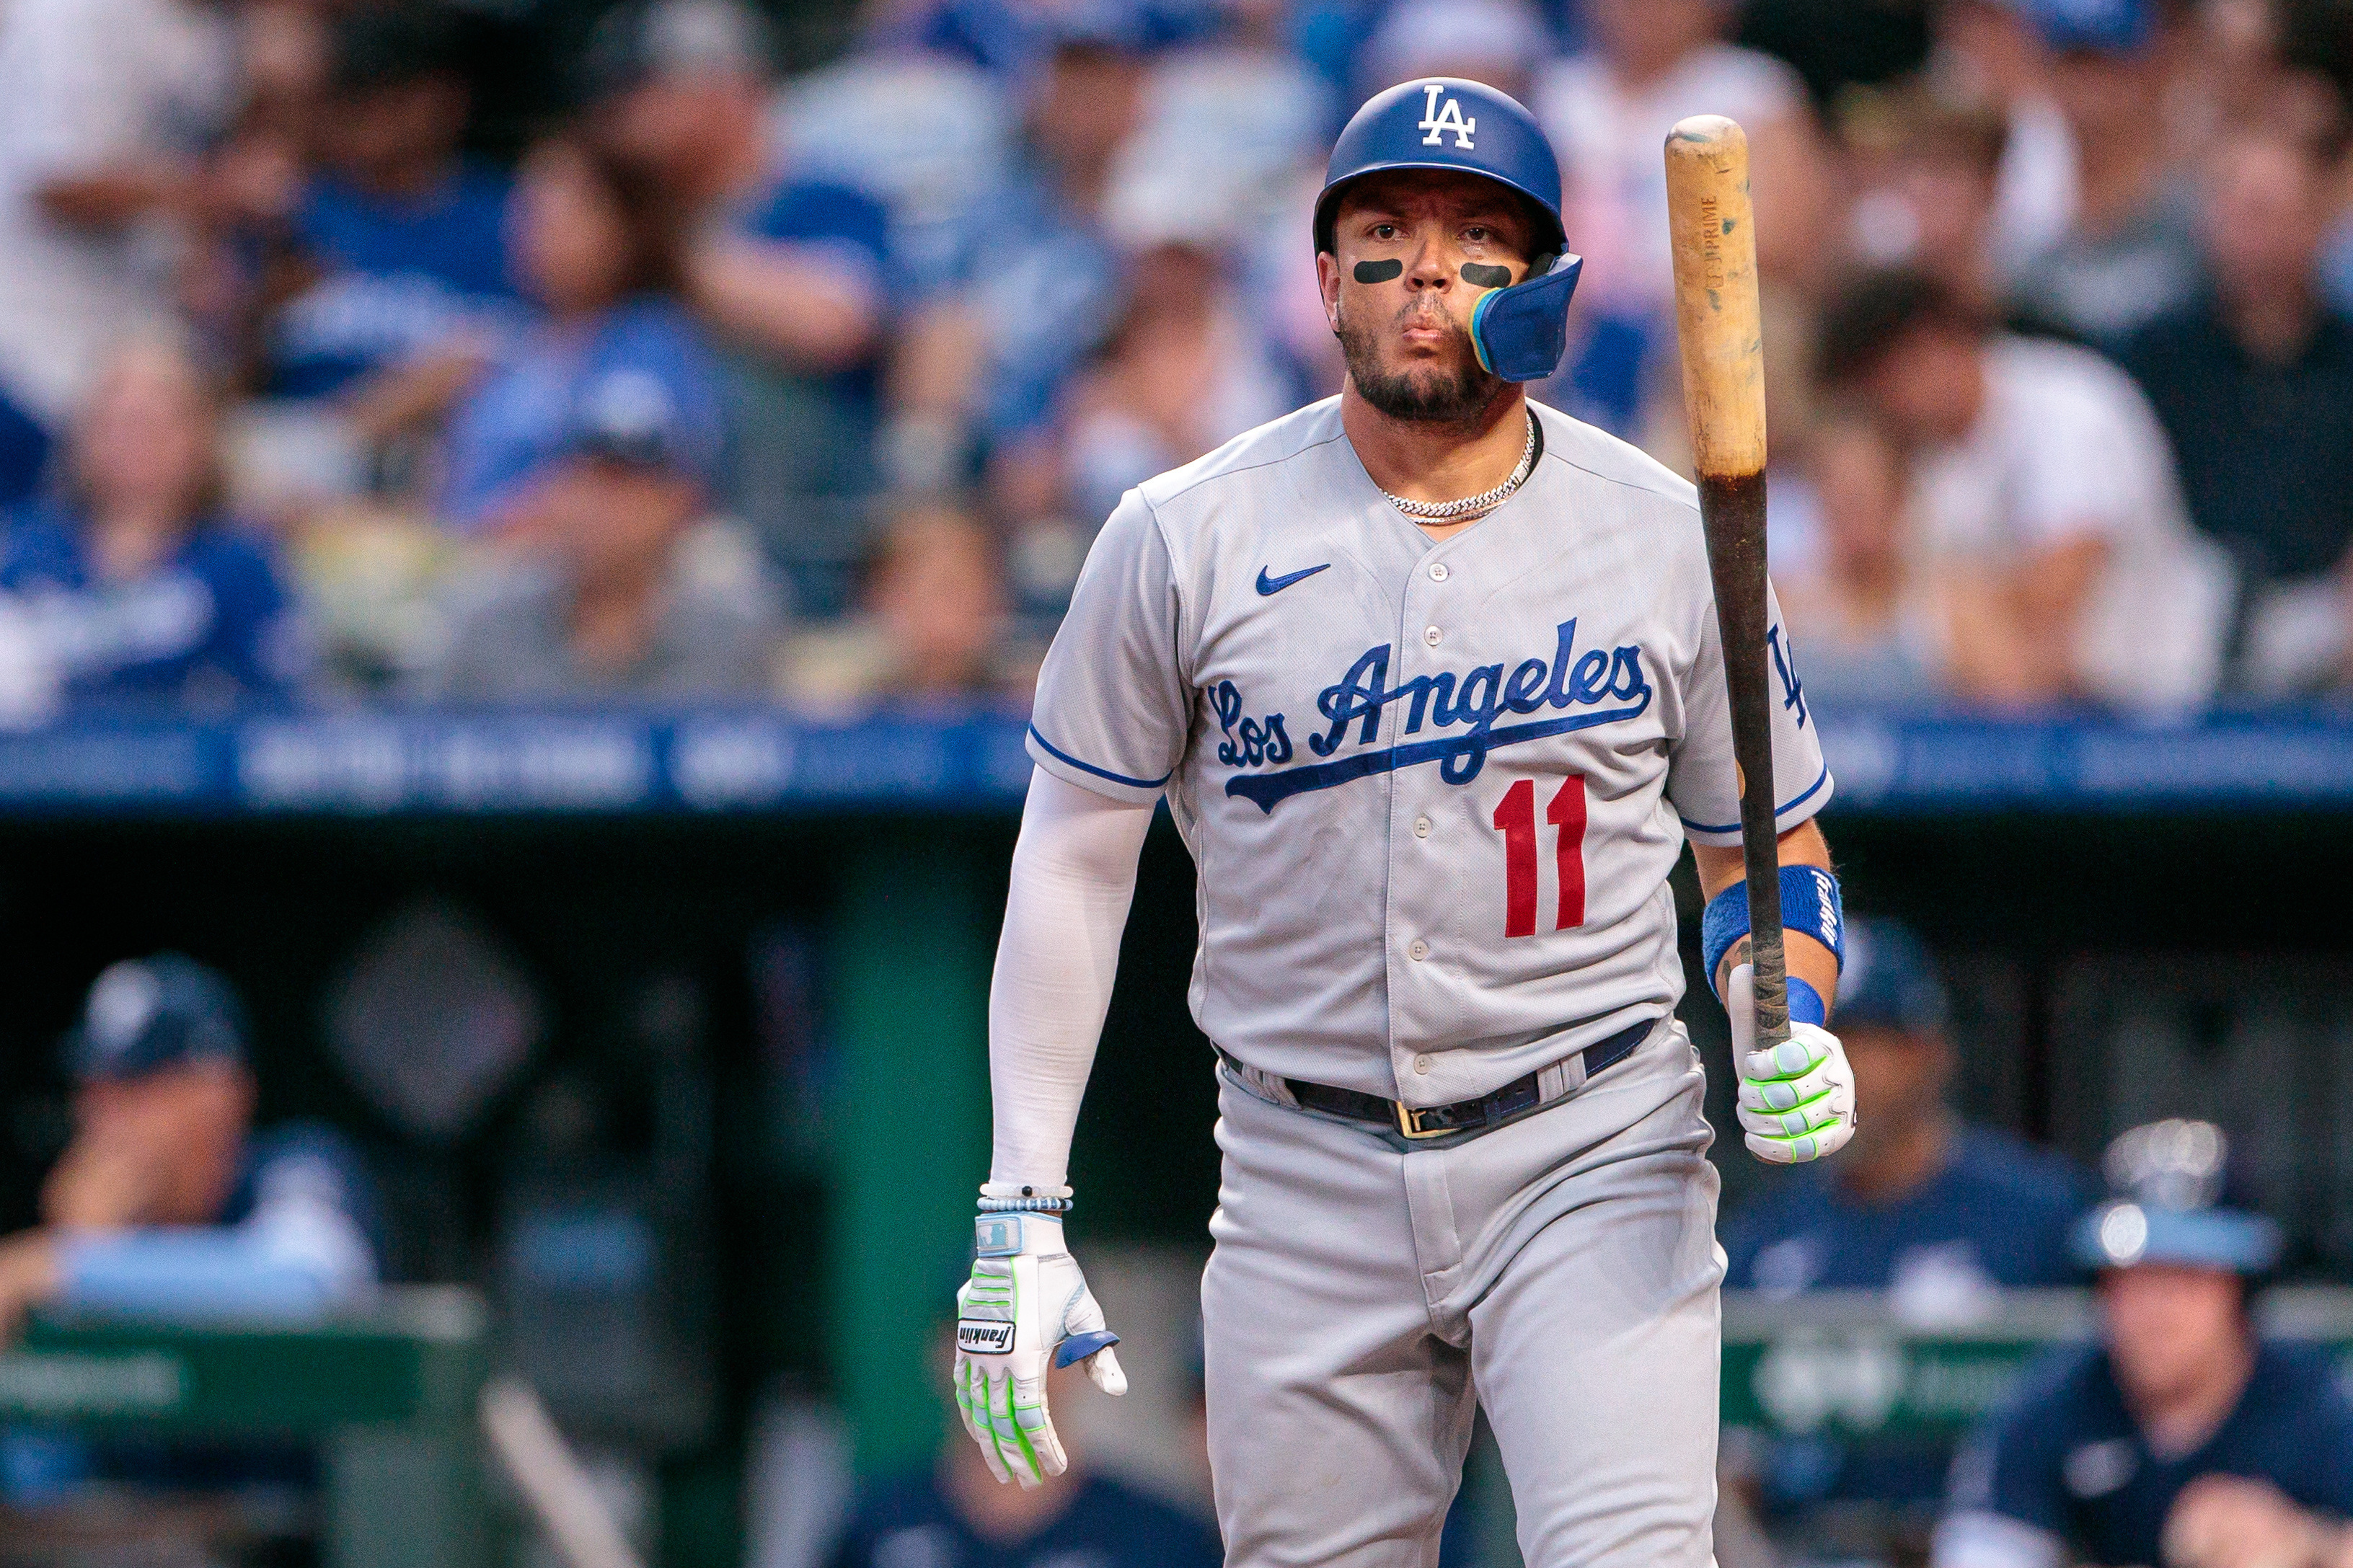 Mookie Betts homers twice as Dodgers handle Royals – Orange County